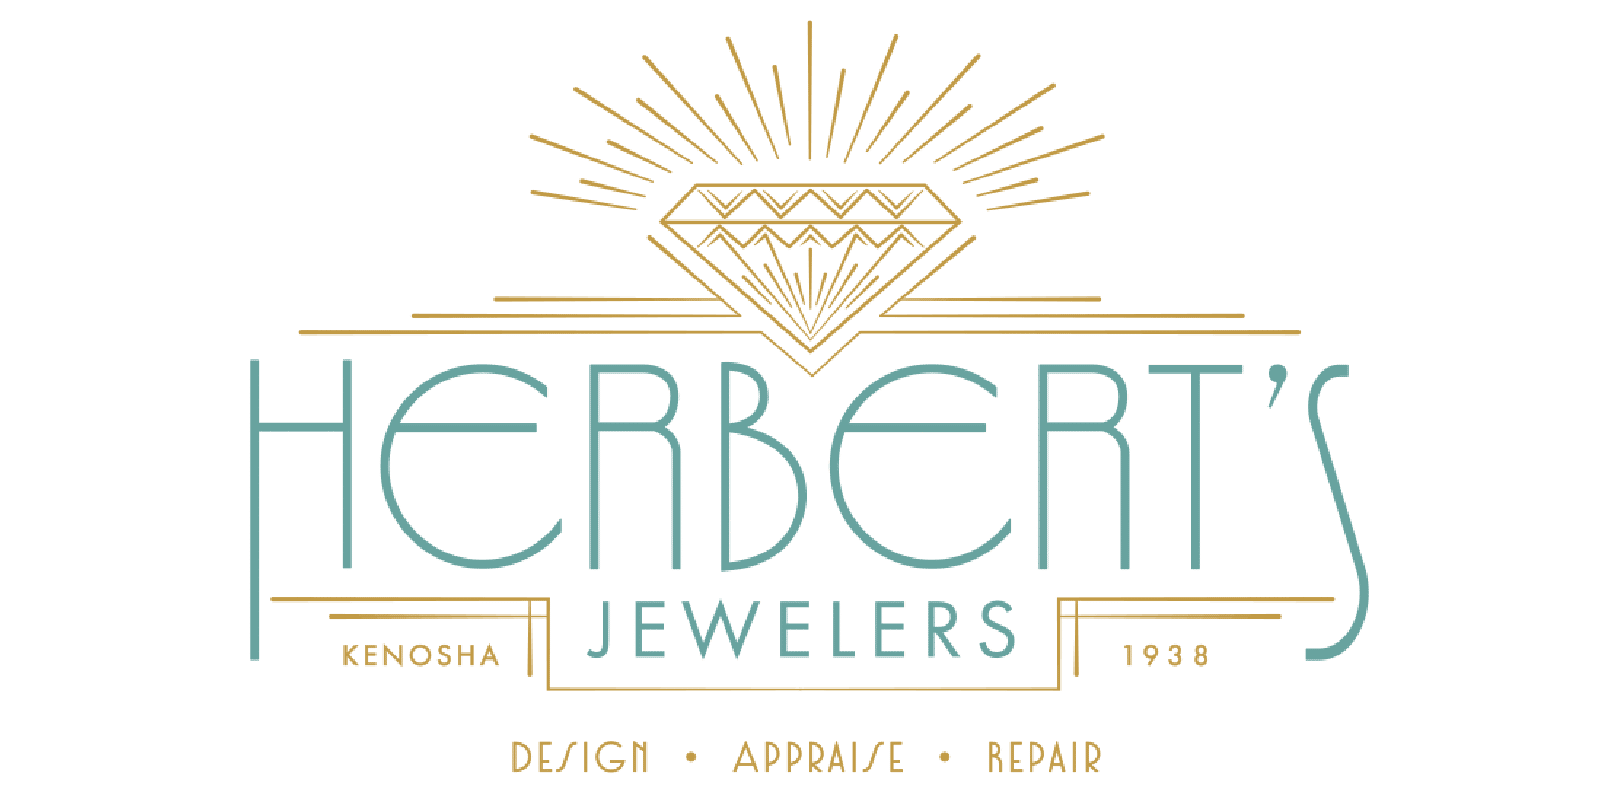 page 1 club, the gratzi, herbert's jewelers